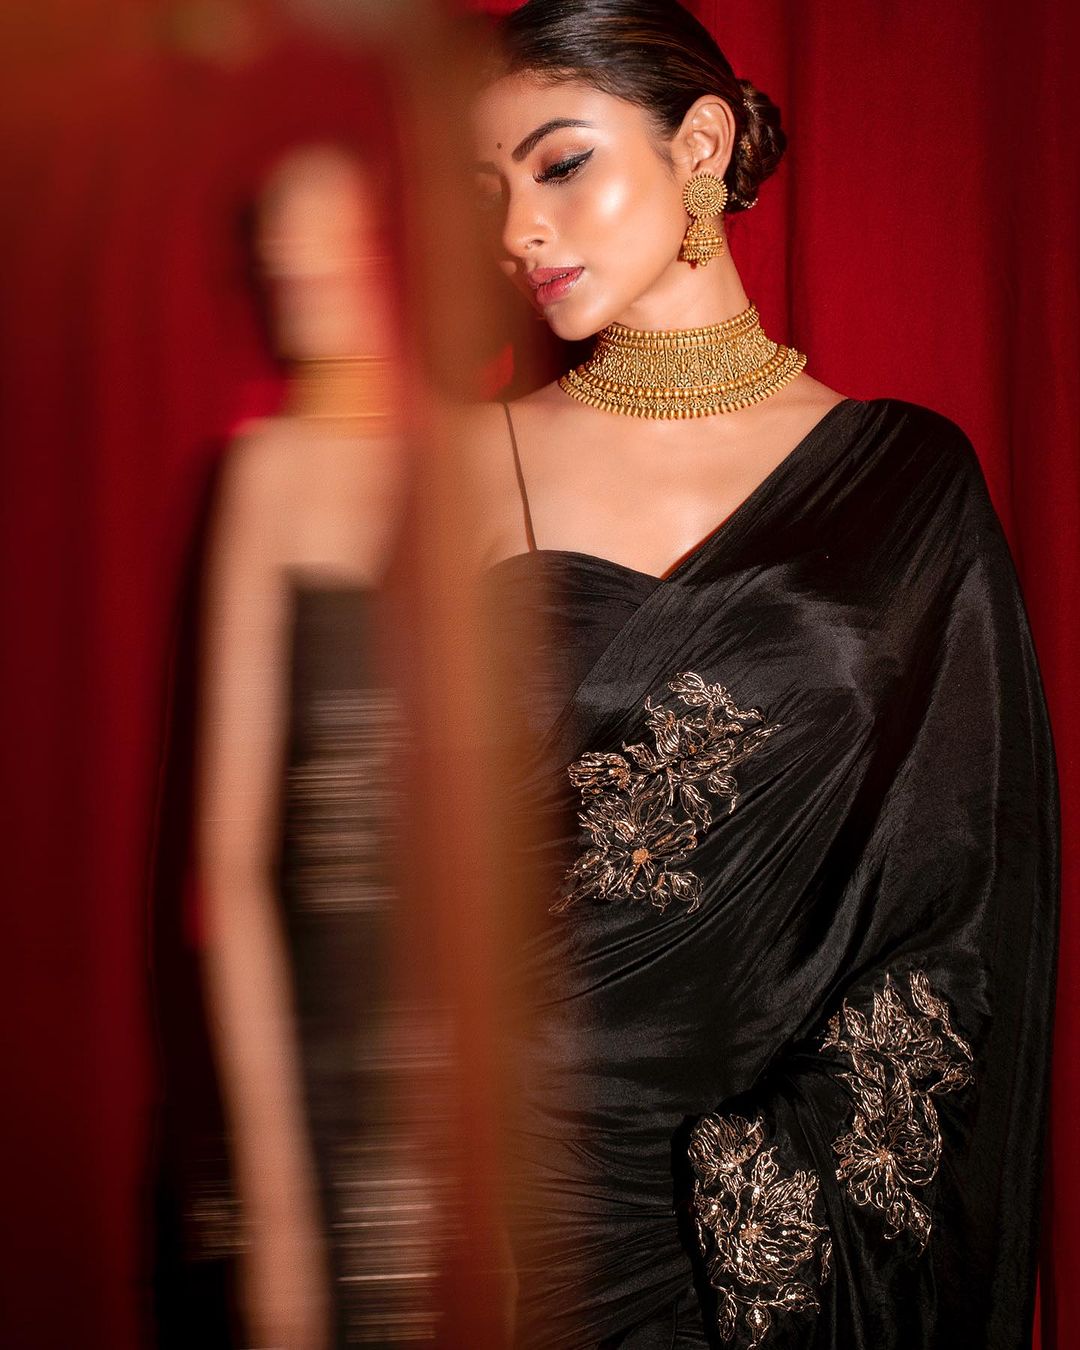 Black saree hi-res stock photography and images - Alamy